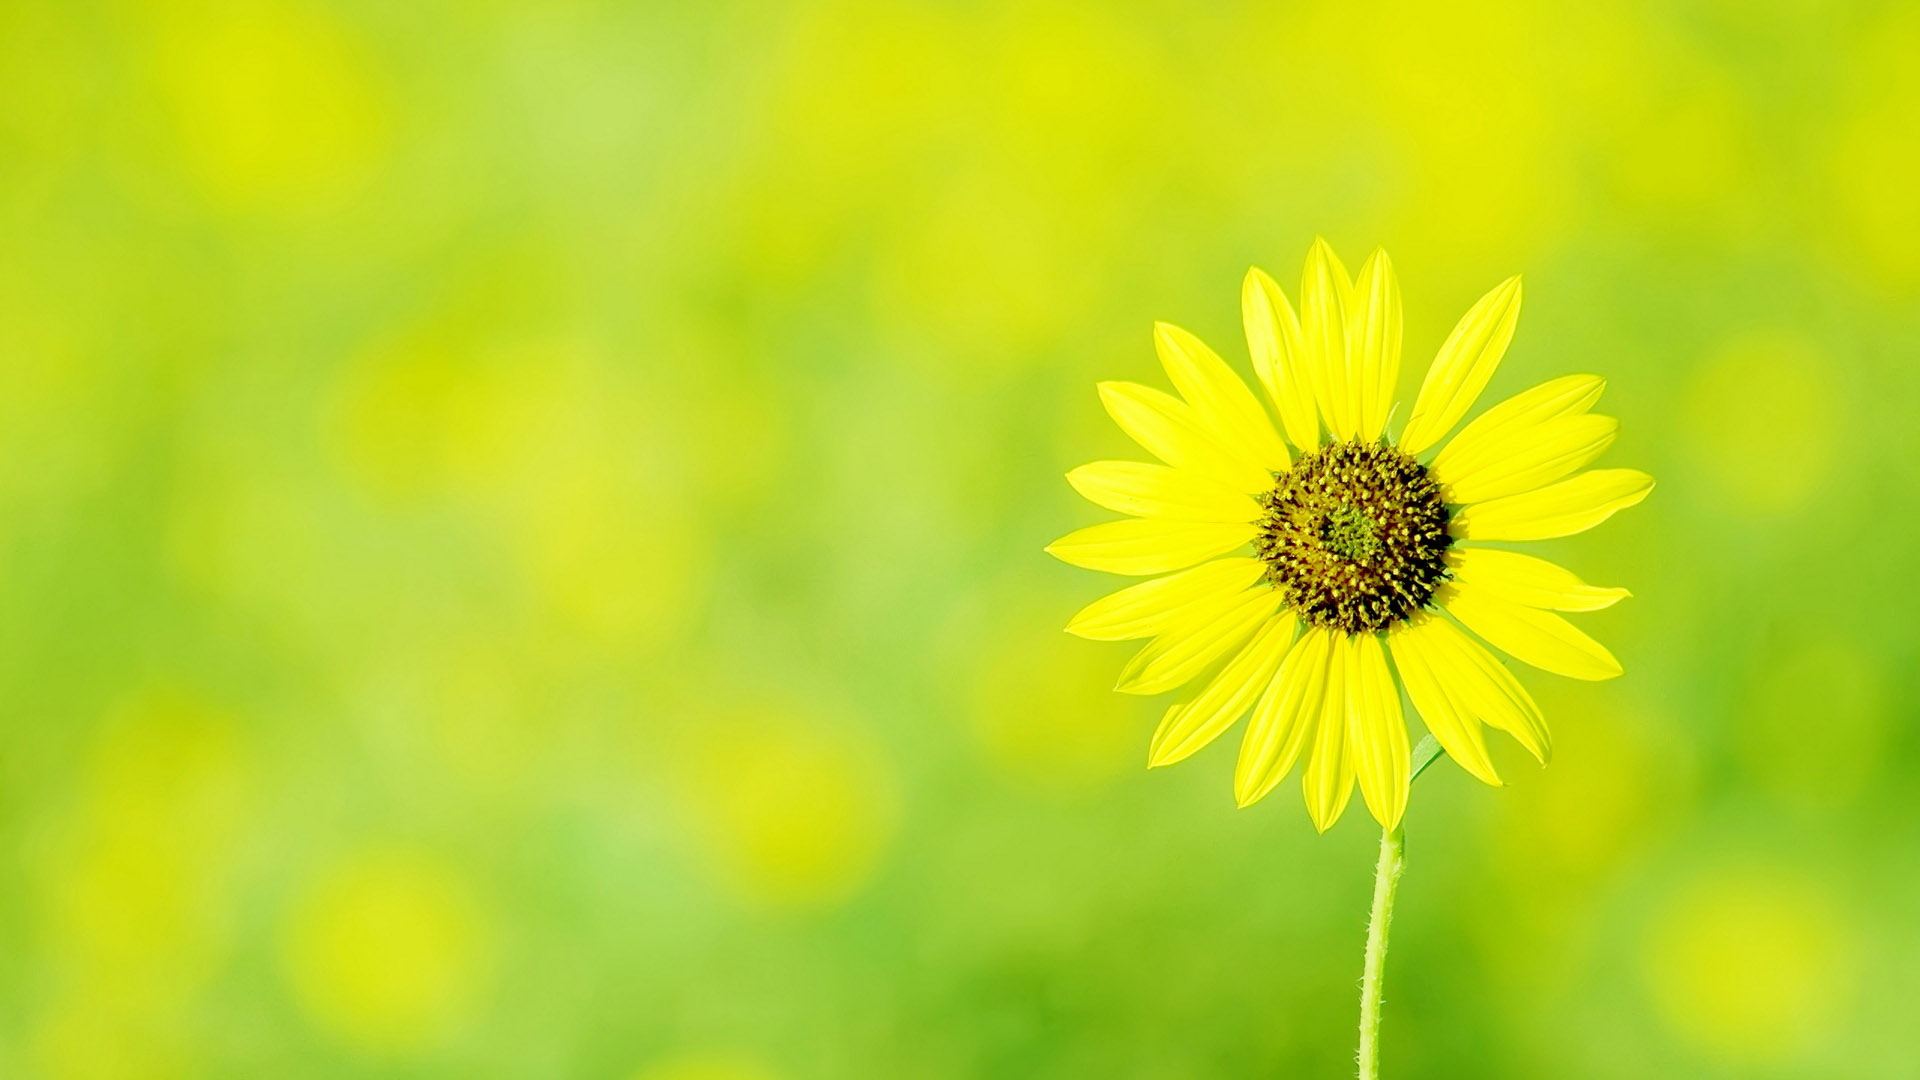 Sunflower desktop wallpaper picture